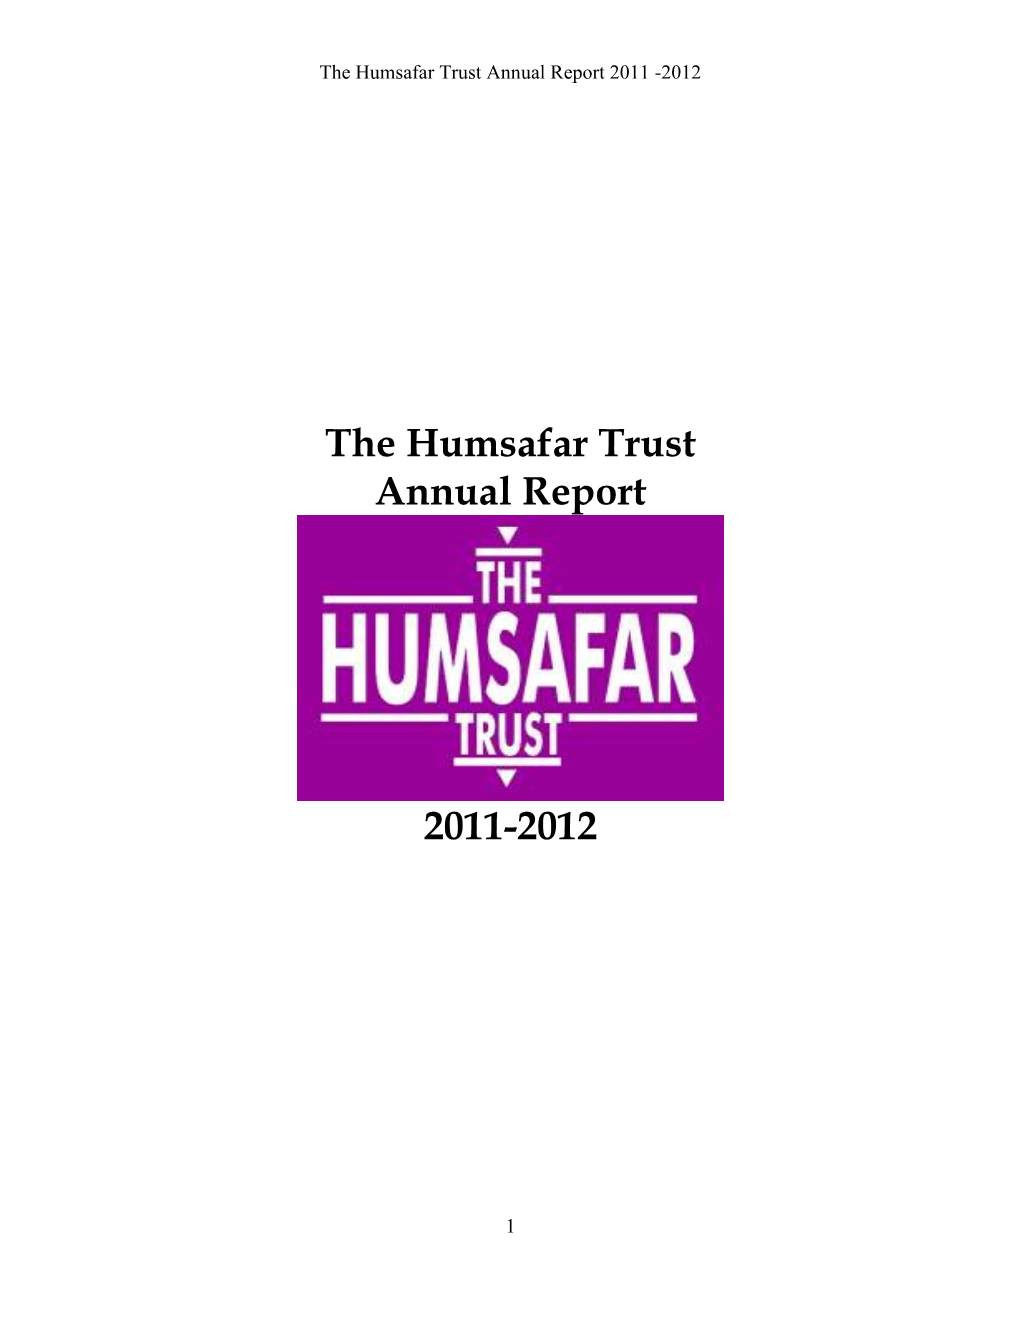 The Humsafar Trust Annual Report 2011-2012